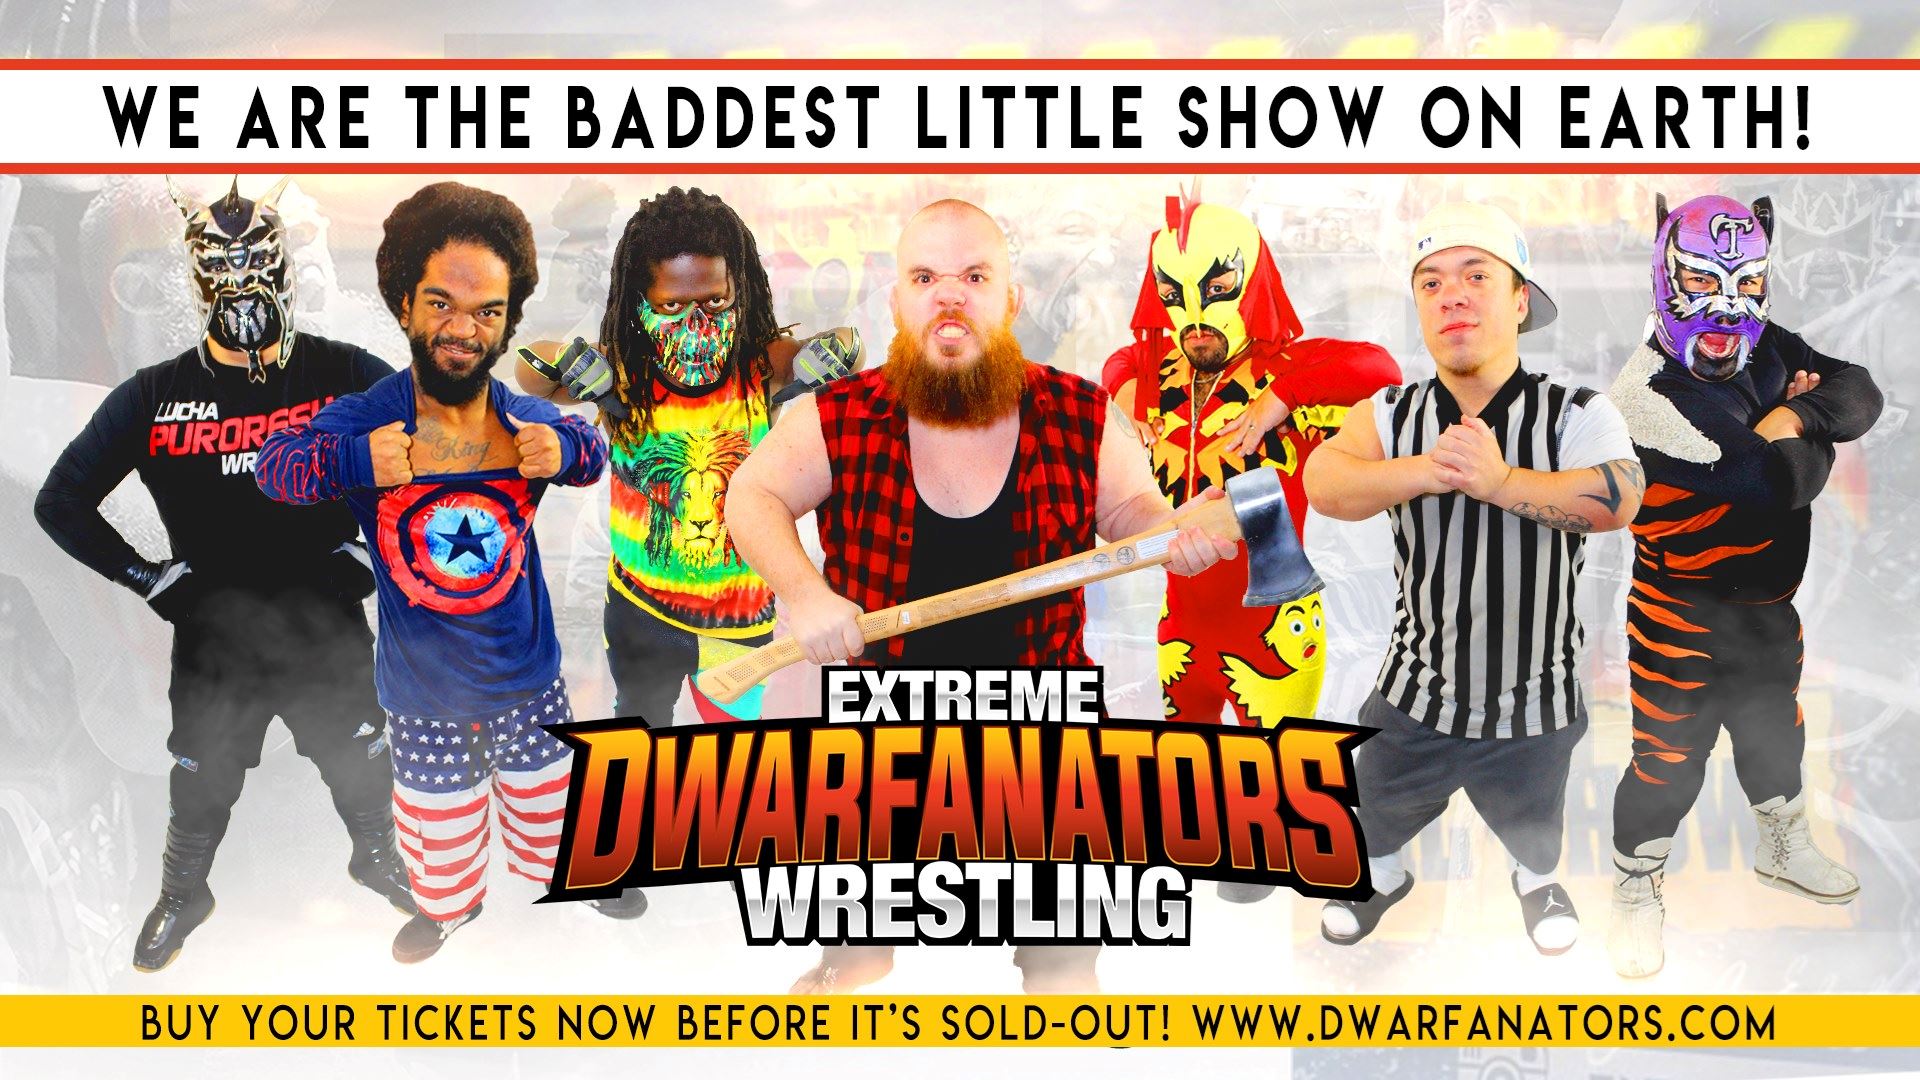 <h1 class="tribe-events-single-event-title">Extreme Dwarfanators Wrestling</h1>